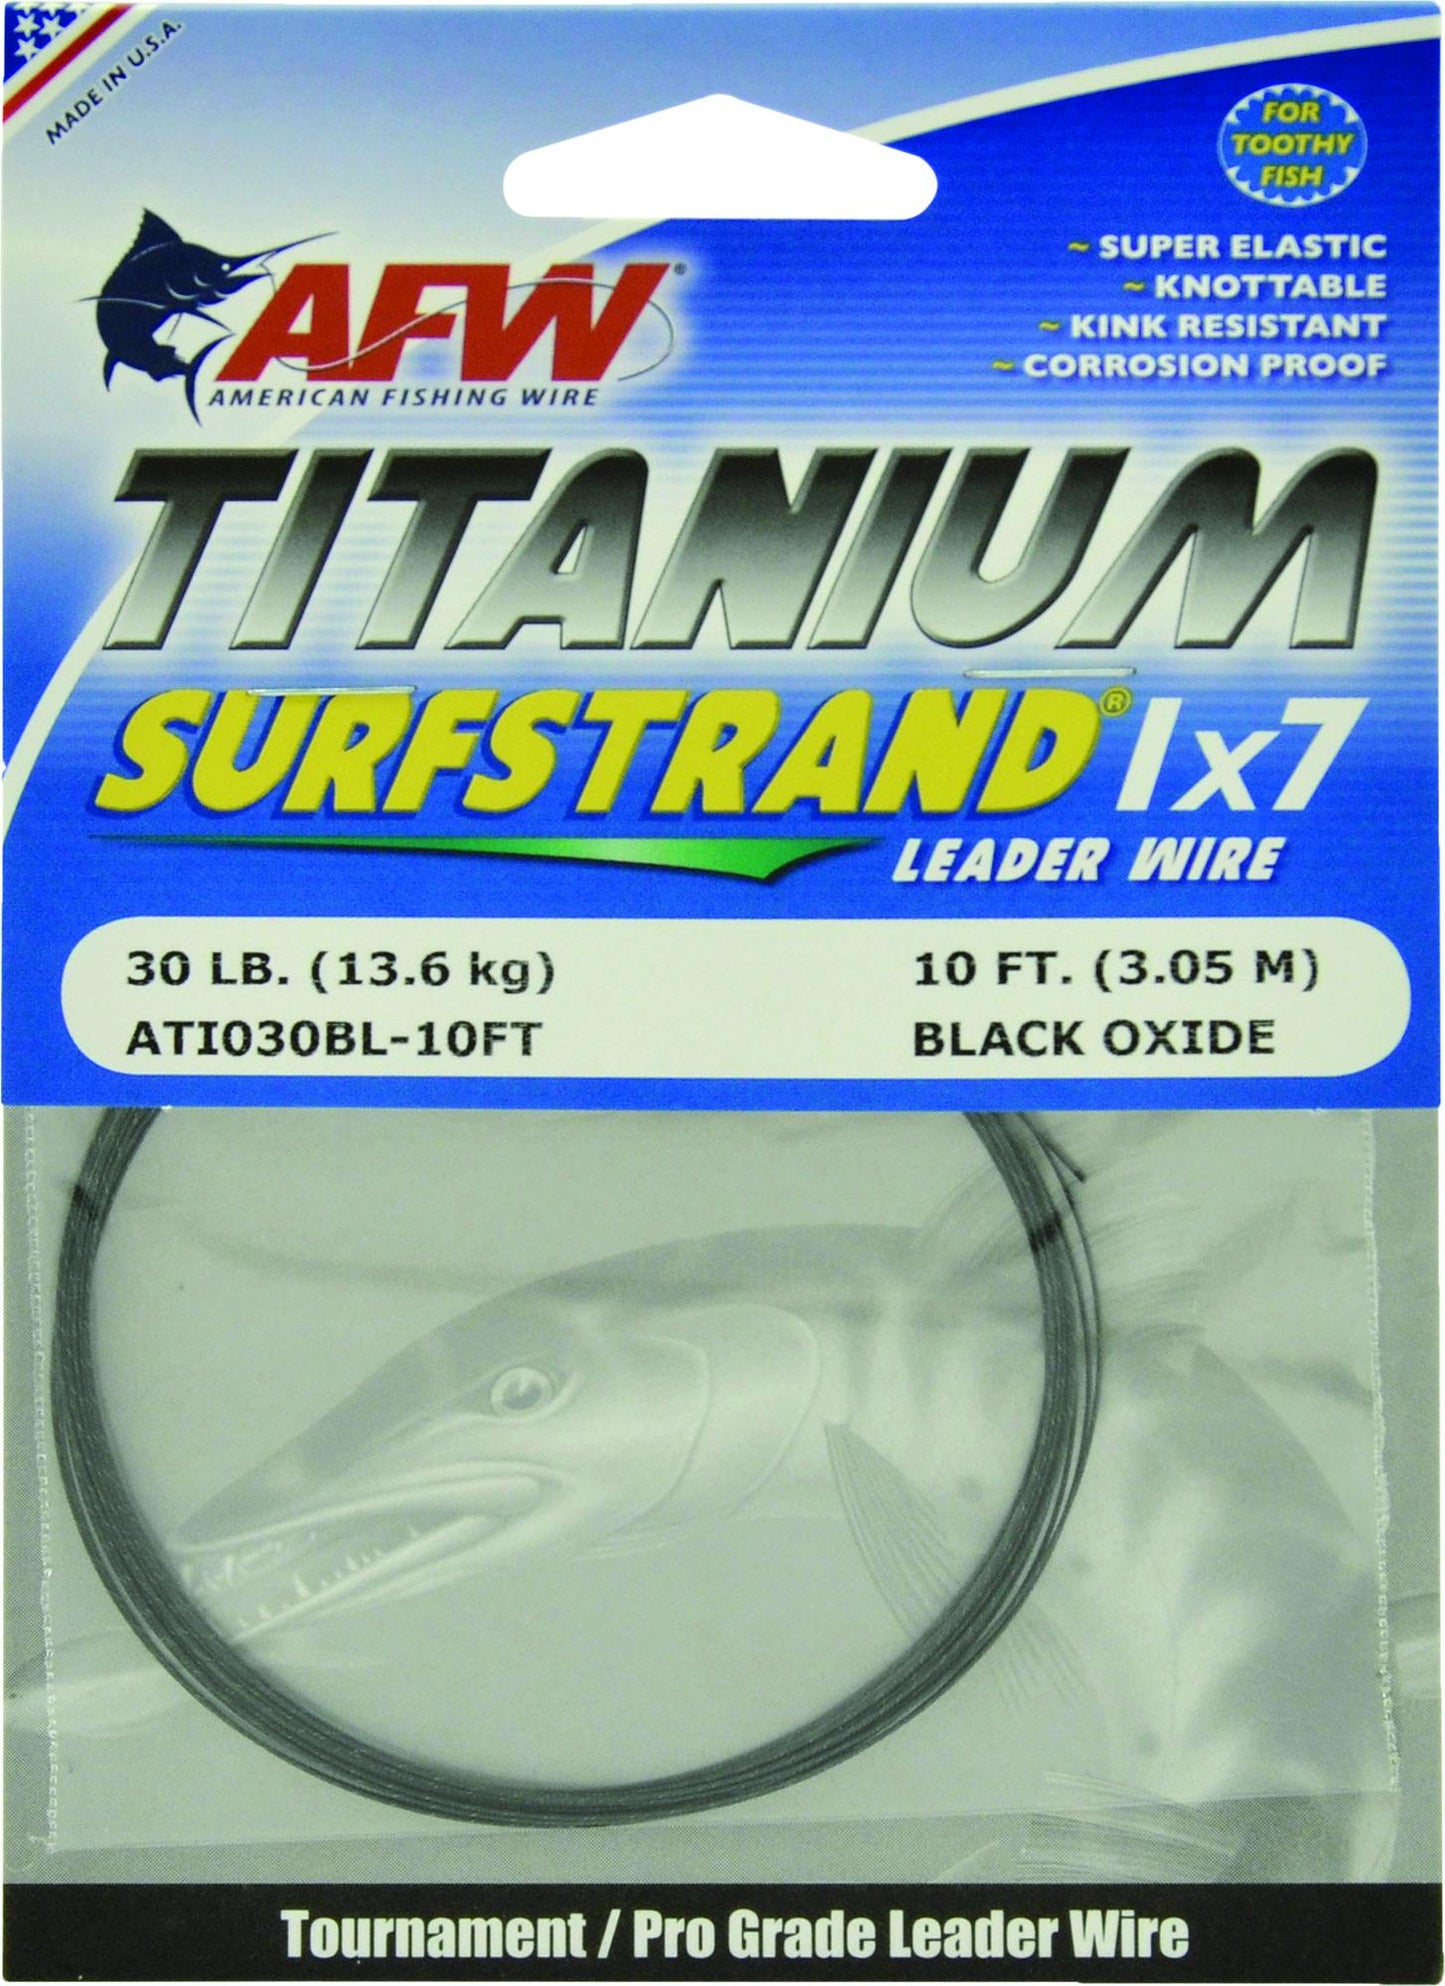 AFW ATI030BL-10FT Titanium Surfstrand Bare 1x7 Leader Wire